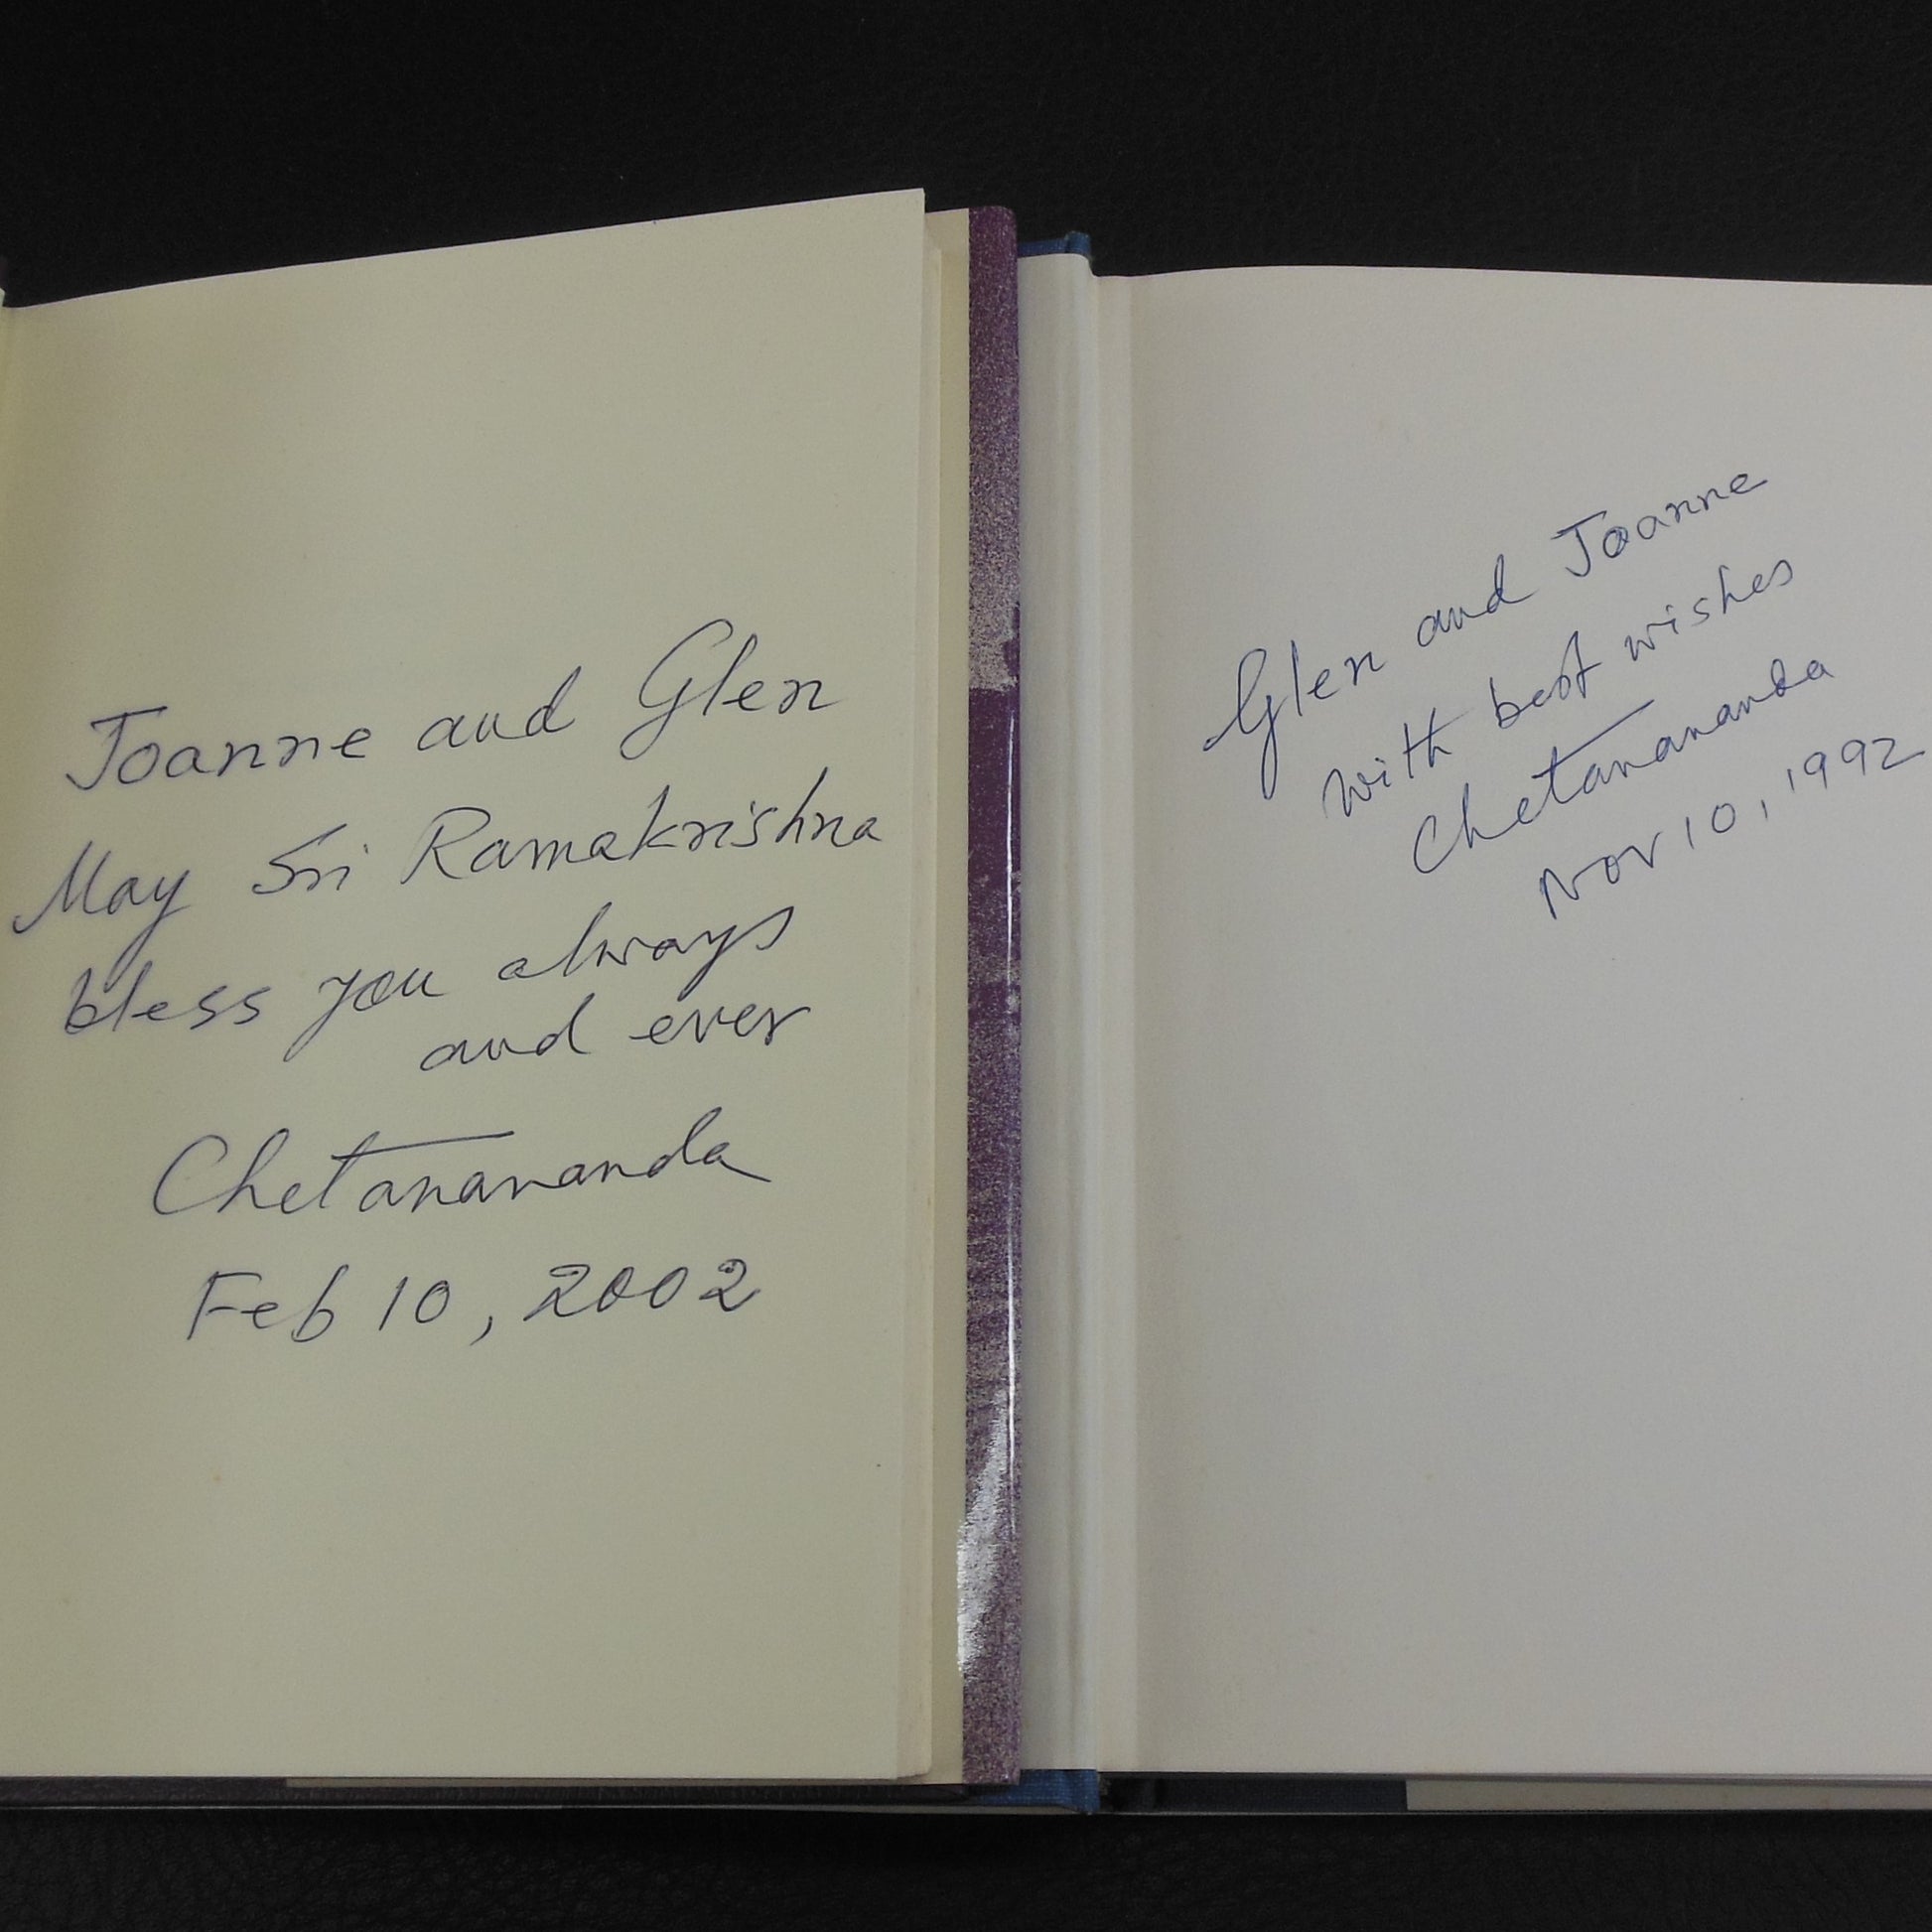 Swami Chetanananda 2 Signed Book Translations - Spiritual Treasures & A Guide To Spiritual Life Inscribed